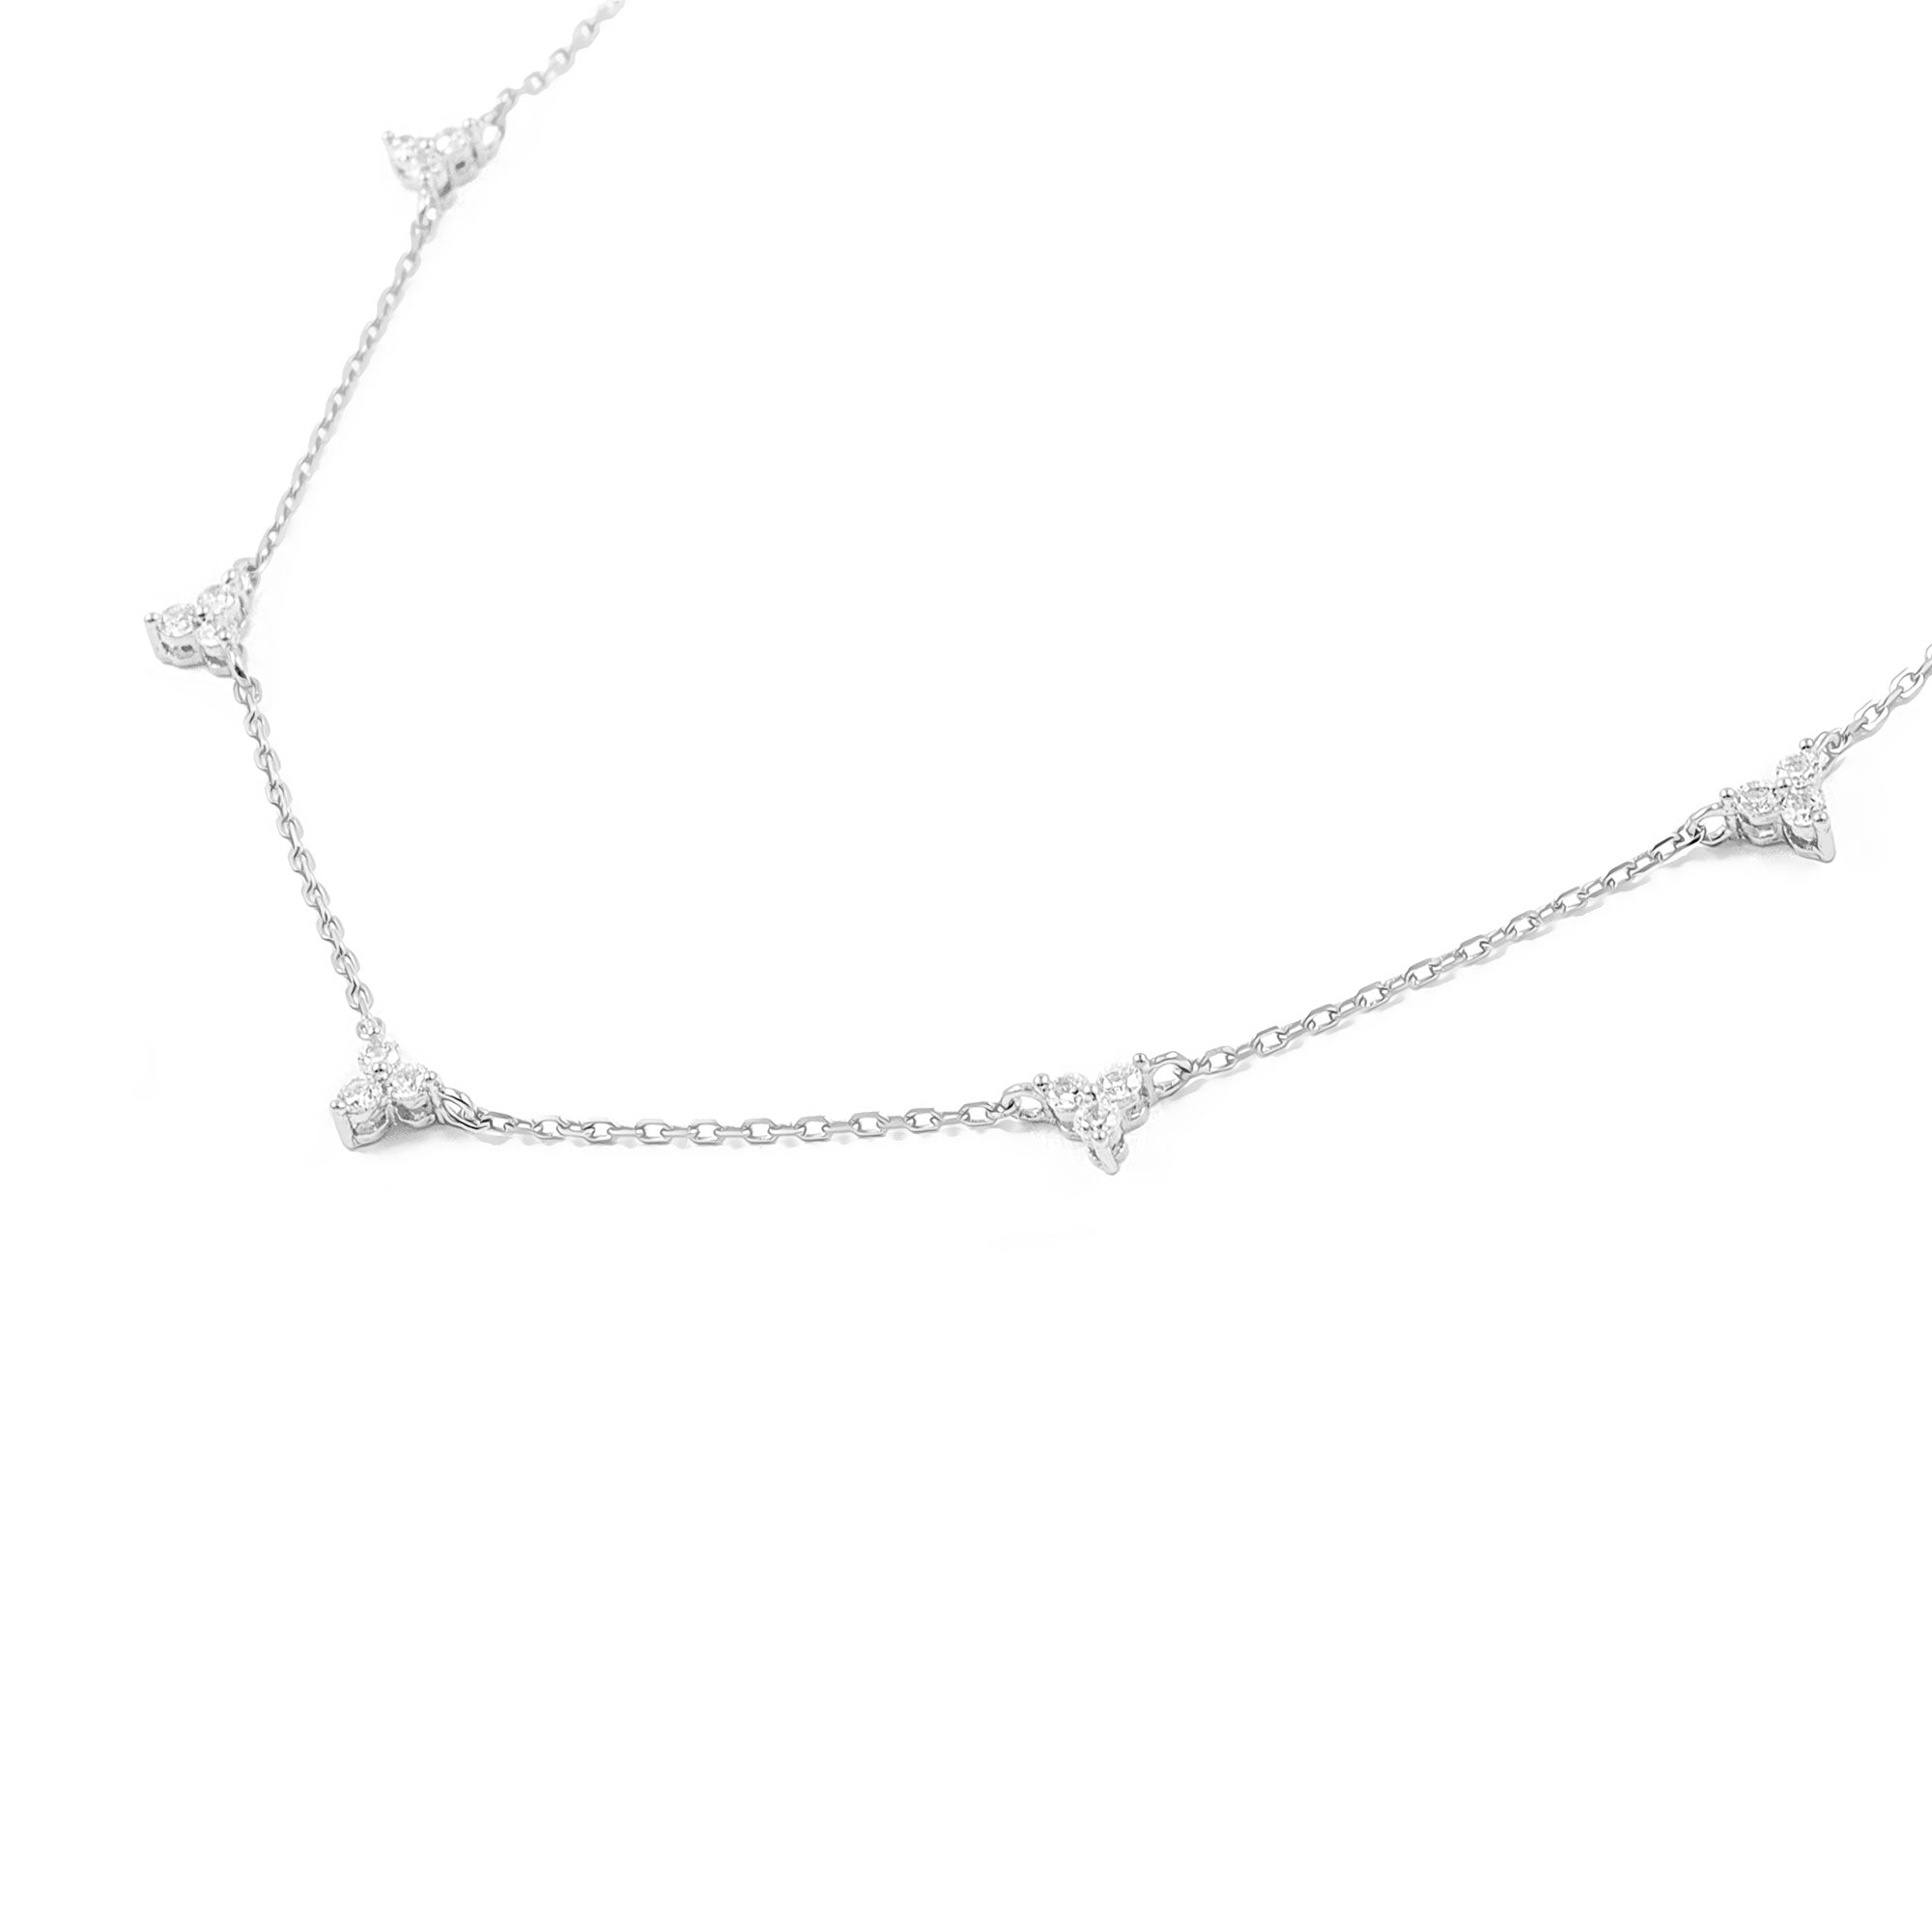 Shiny Zirconia Sterling Silver Necklace